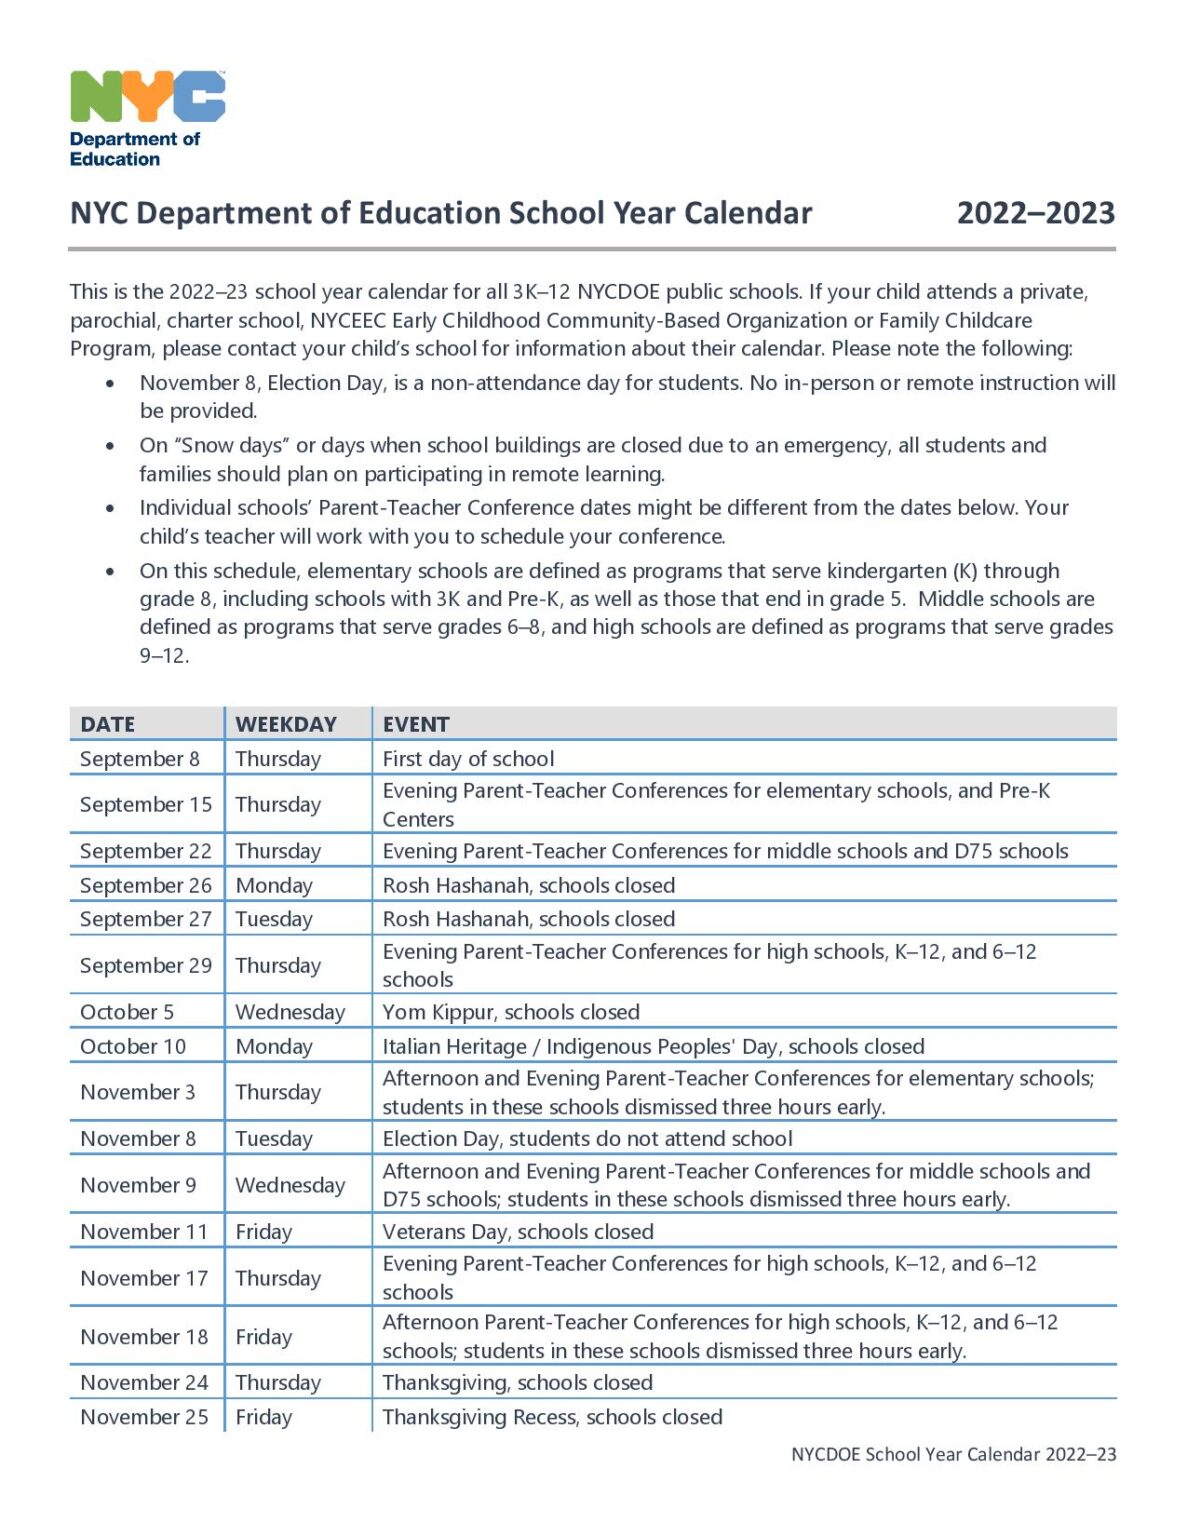 New York City School District Calendar Holidays 2023 - School Calendar Info